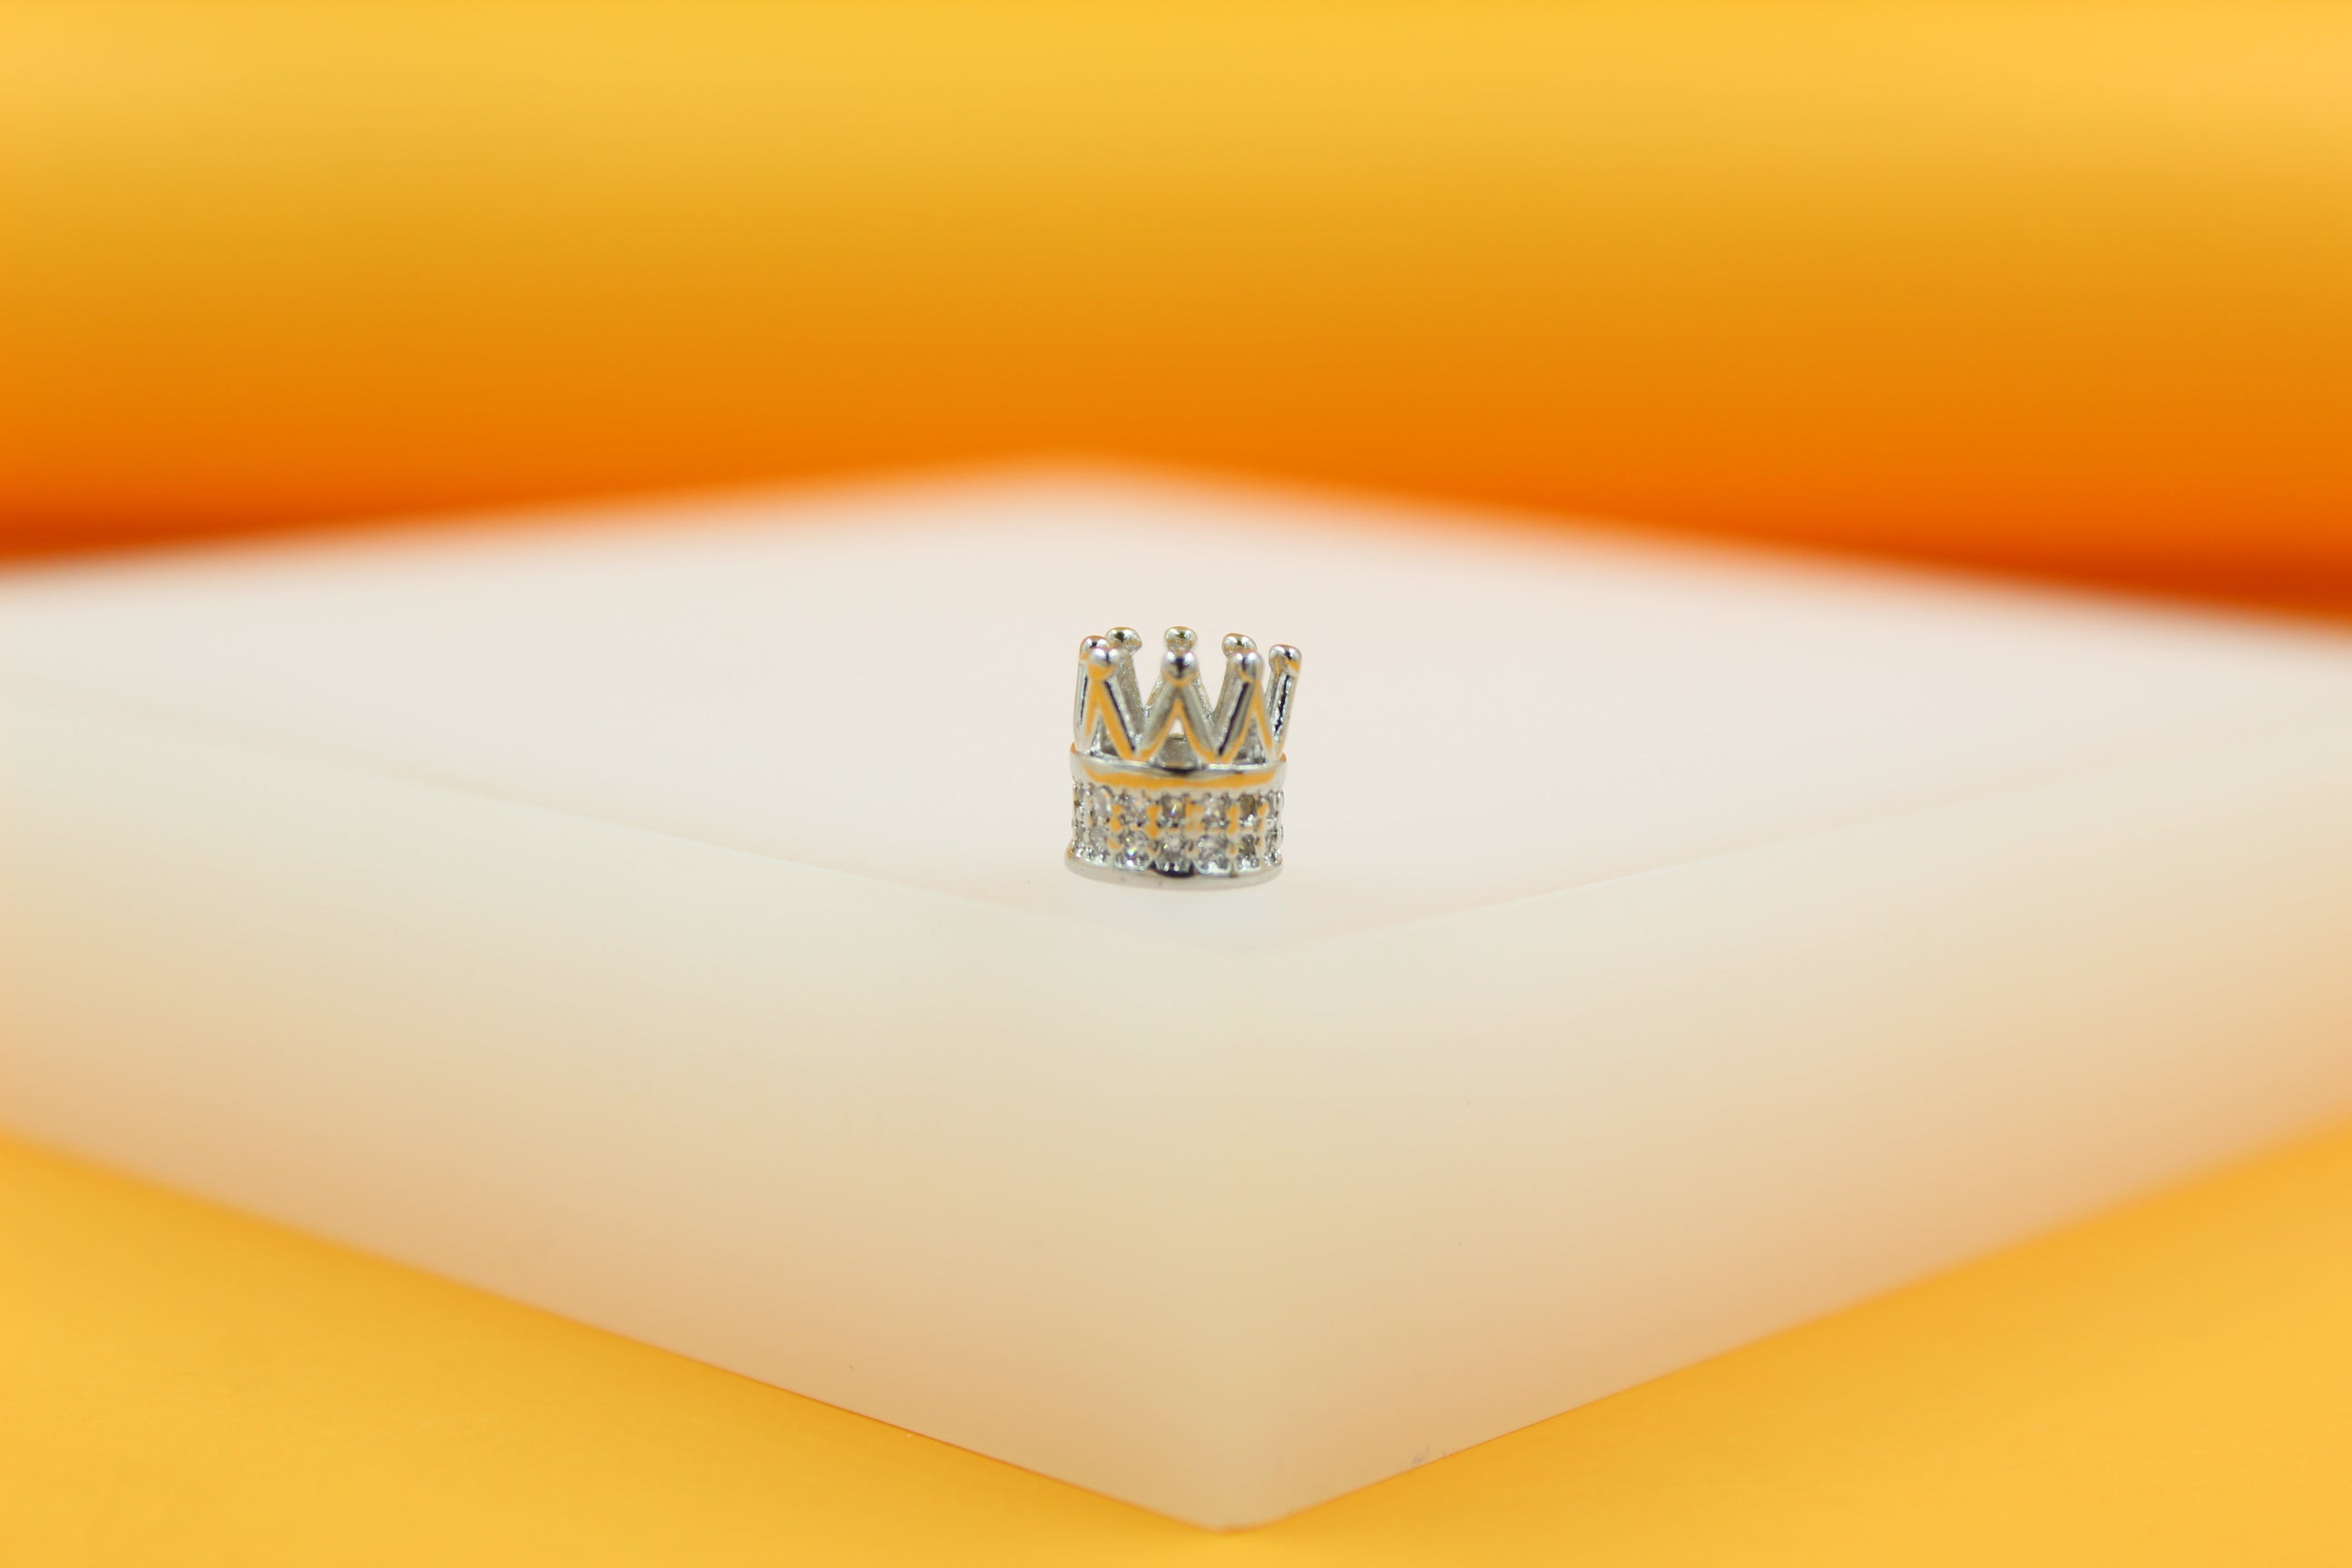 18K Gold Filled Pandora Style Enamel Crown Pendant Charm Bead